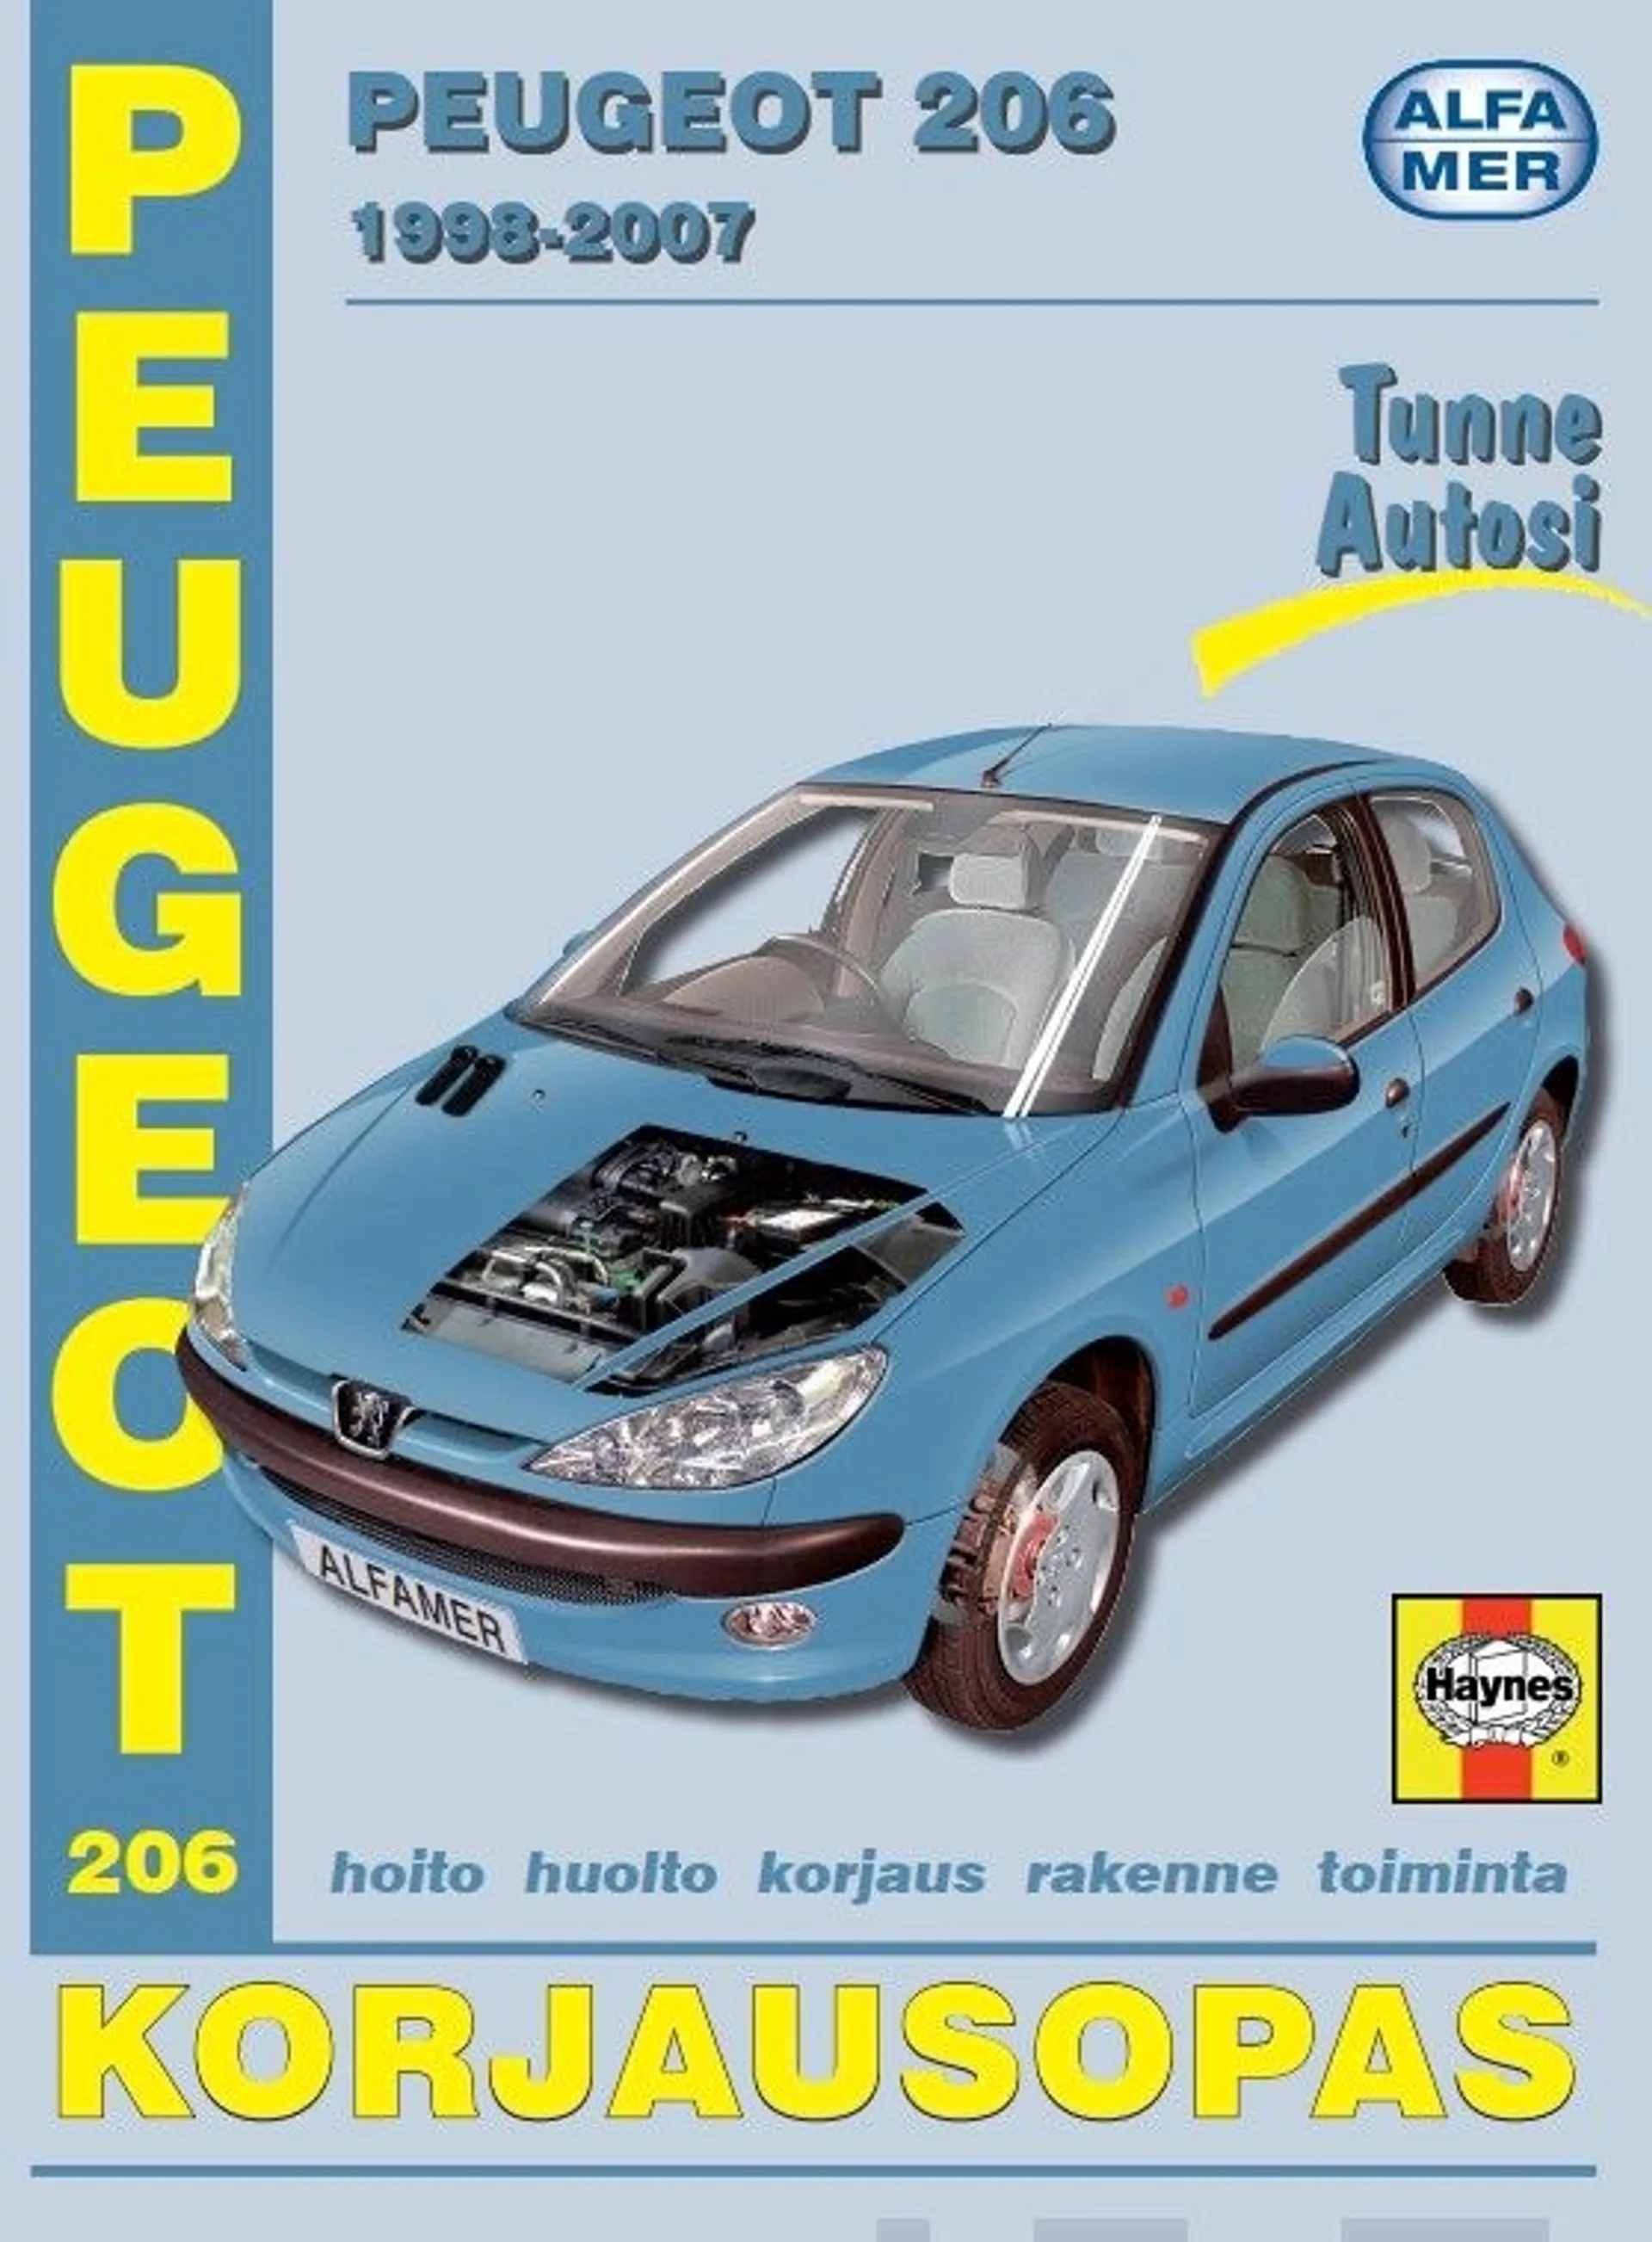 Mauno, Peugeot 206 1998-2007 - korjausopas